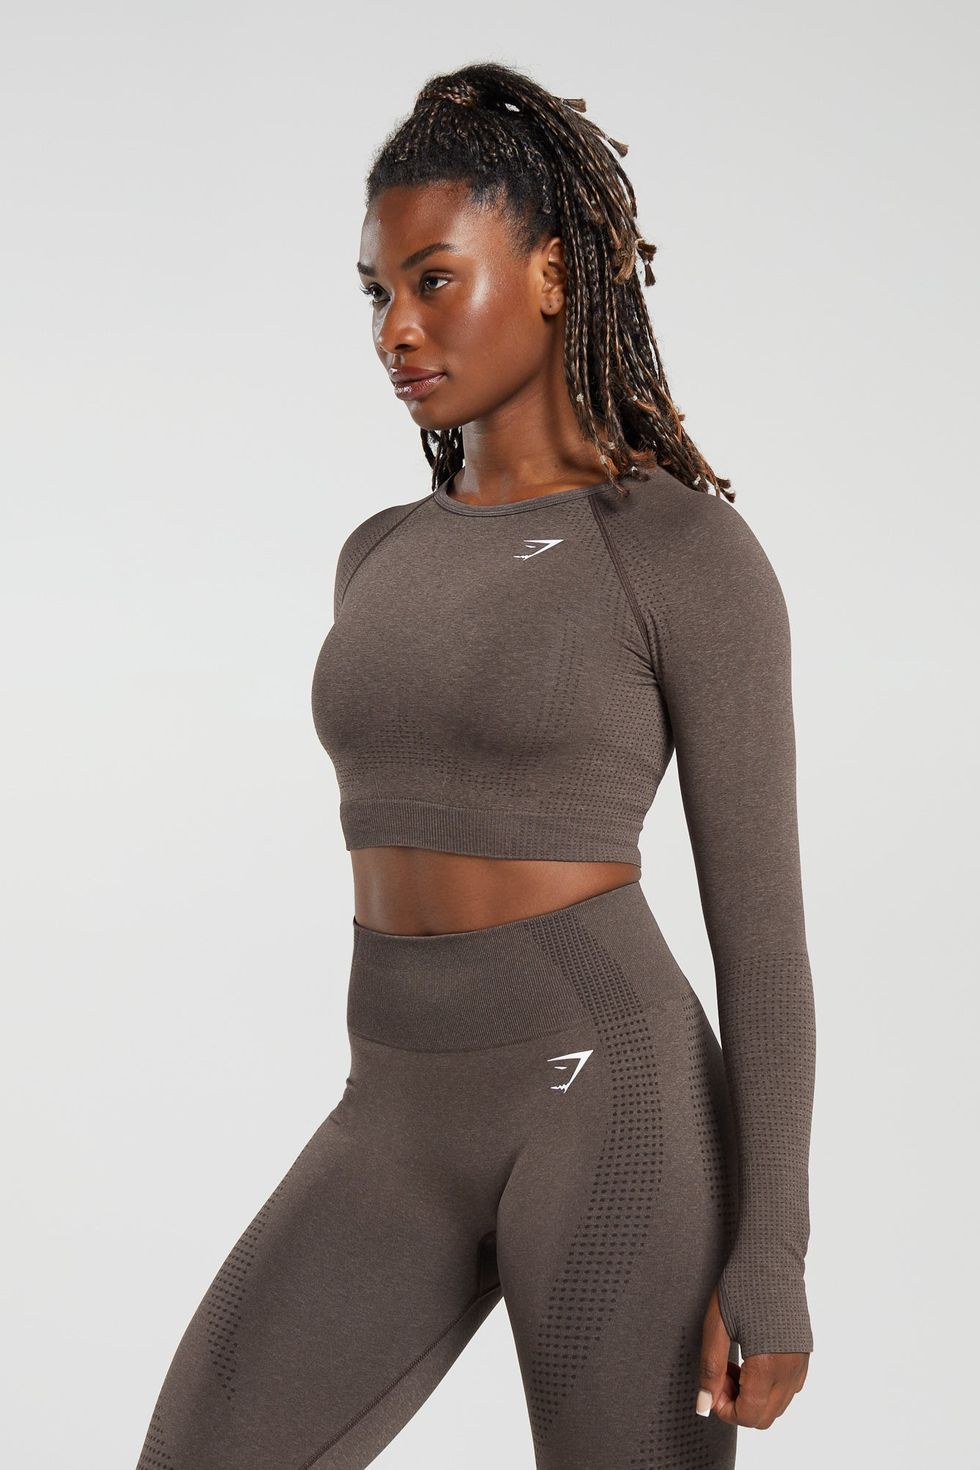 Seamless Long Sleeve Topwomen's Cross Back Yoga Shirt - Seamless Long  Sleeve Crop Top For Gym & Fitness